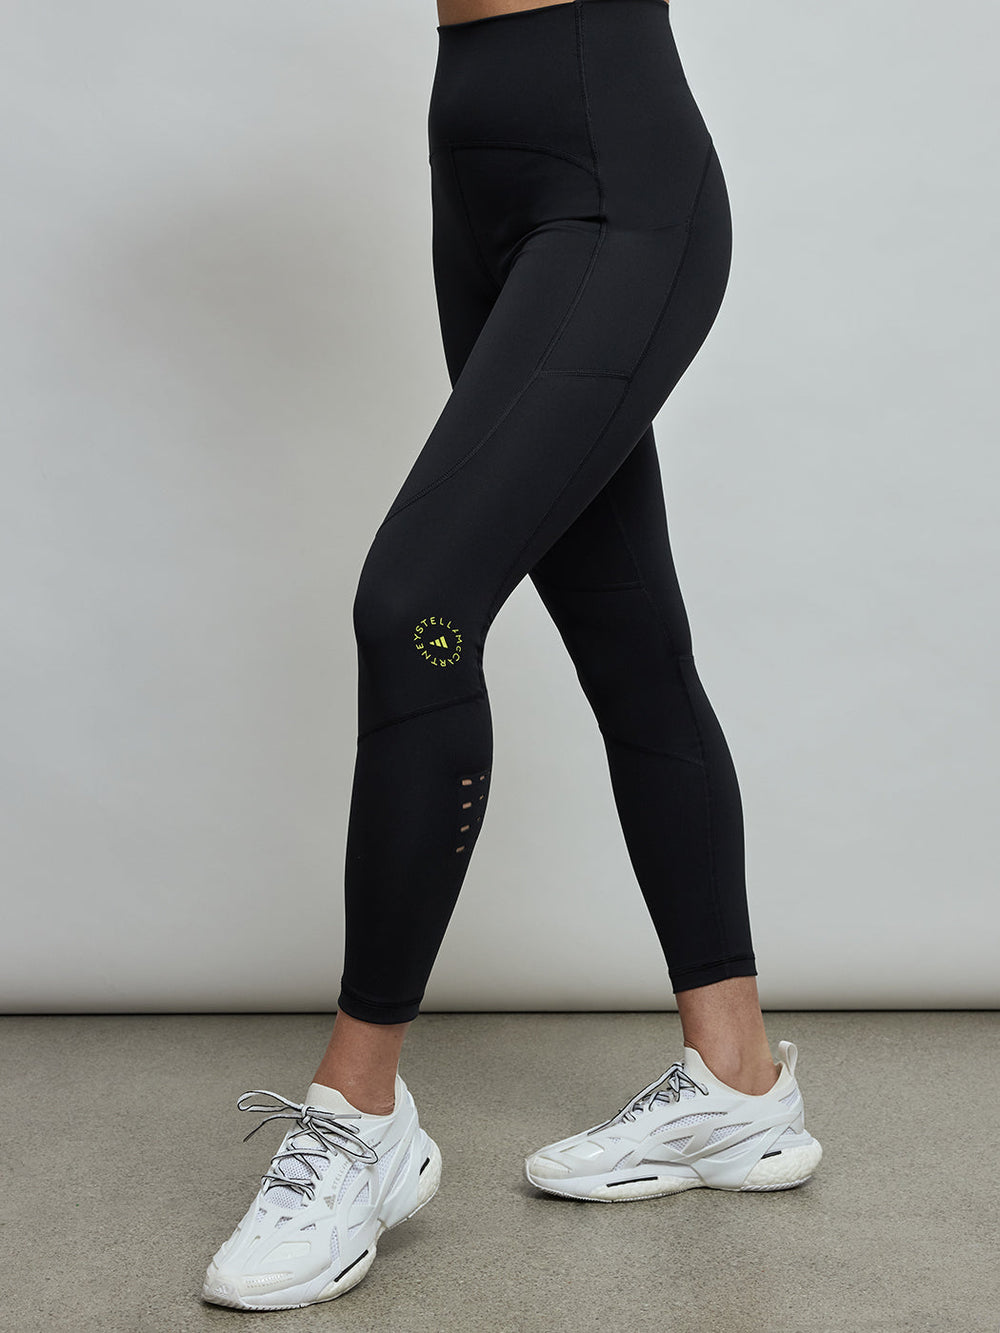 Adidas By Stella Mccartney Truepurpose Training 7/8 Tight - Black/Shock Yellow